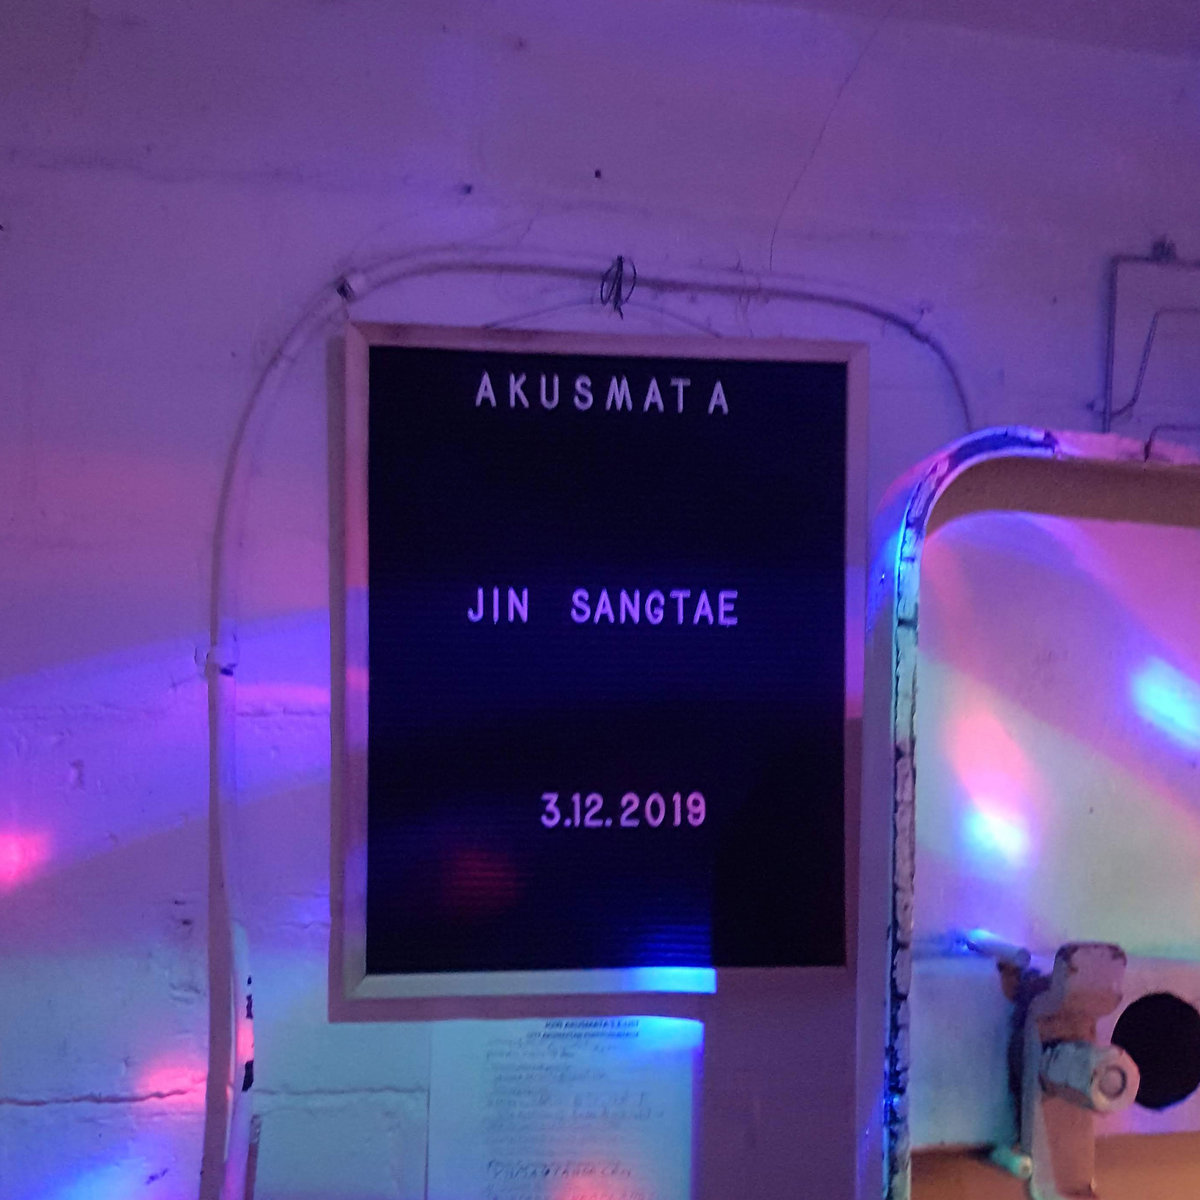 20200204 : Jin Sangtae [Live @Akusmata]